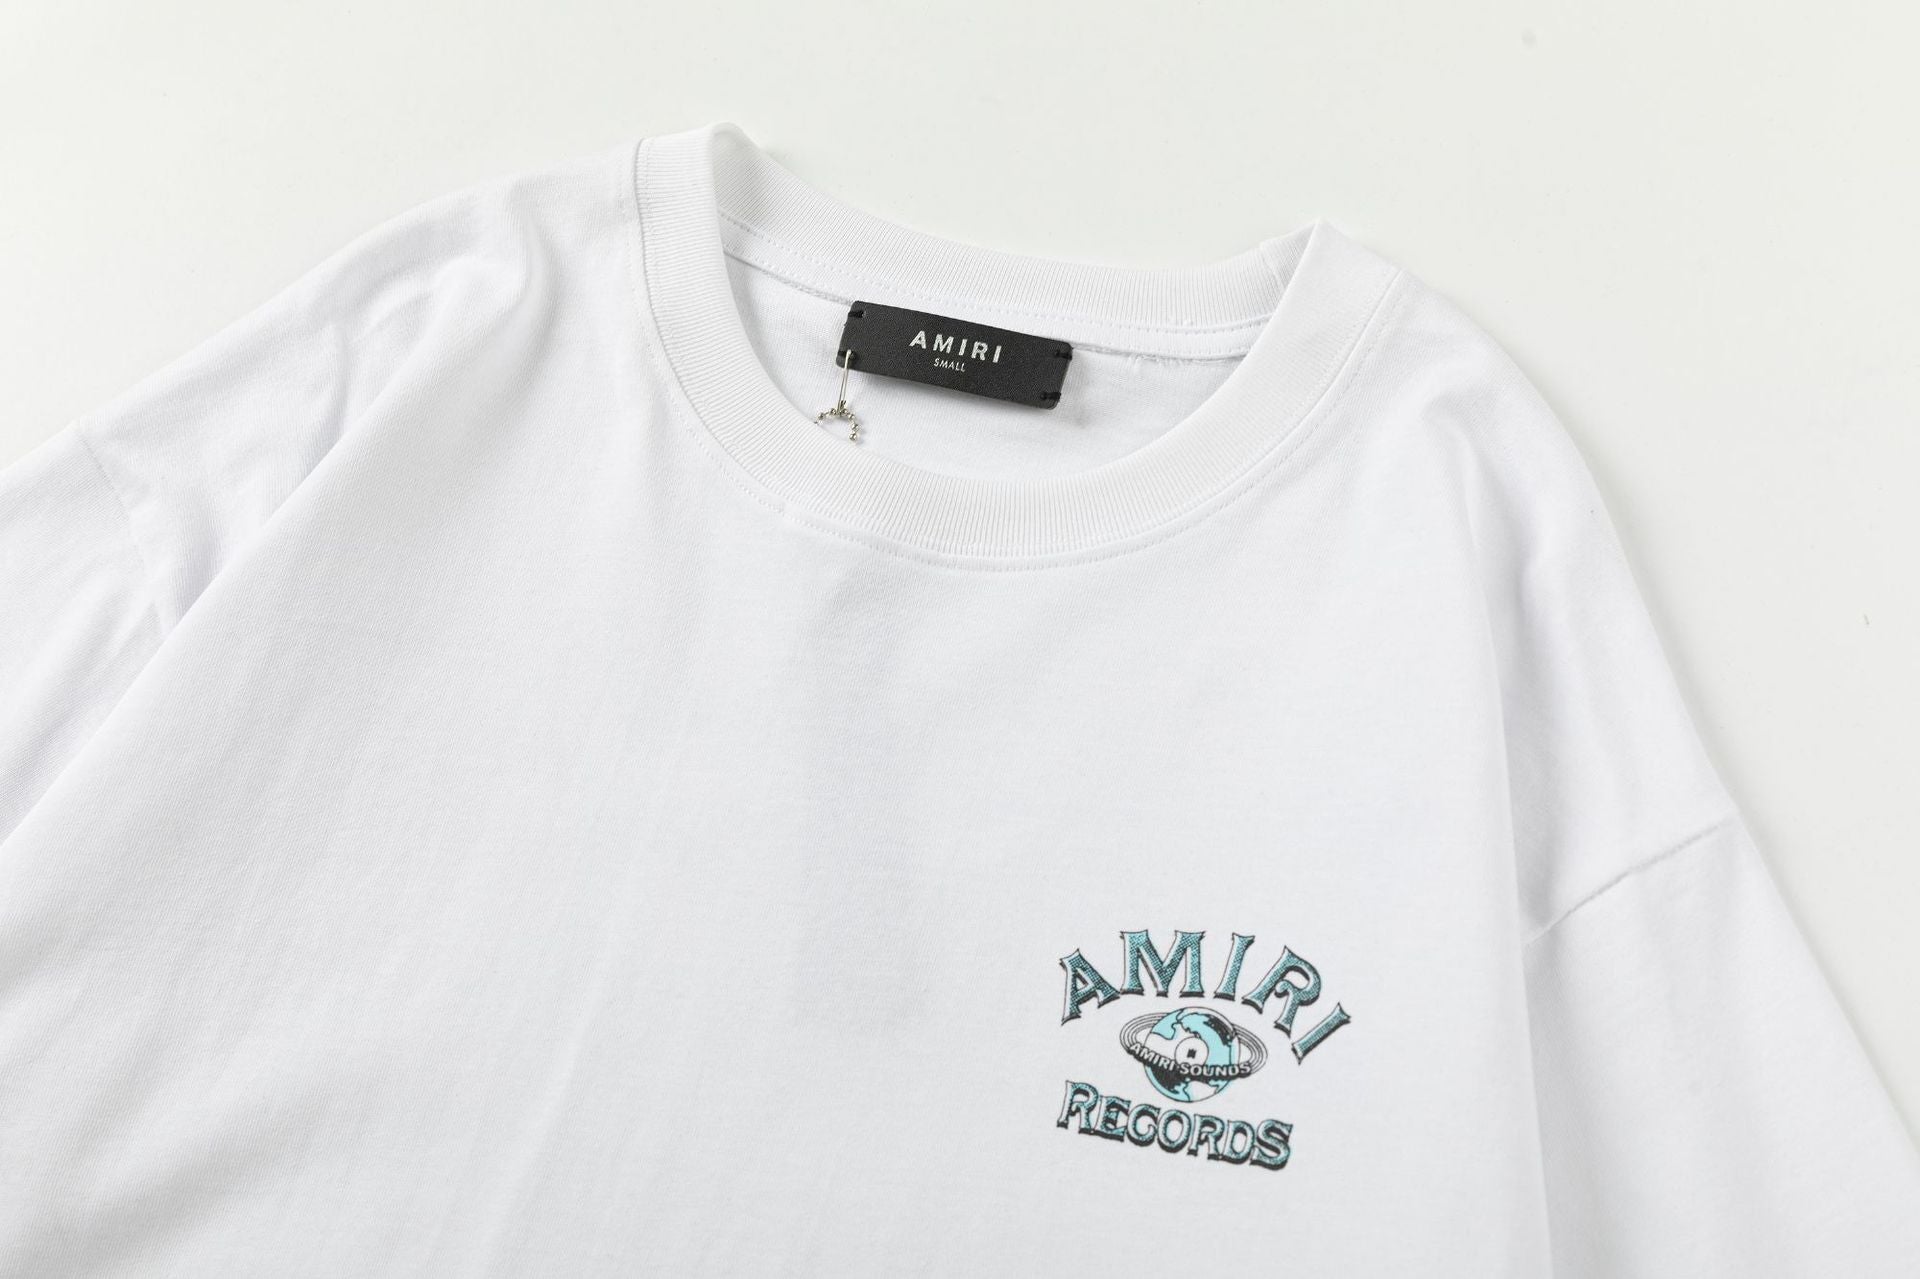 AMlRl Global records T-Shirt